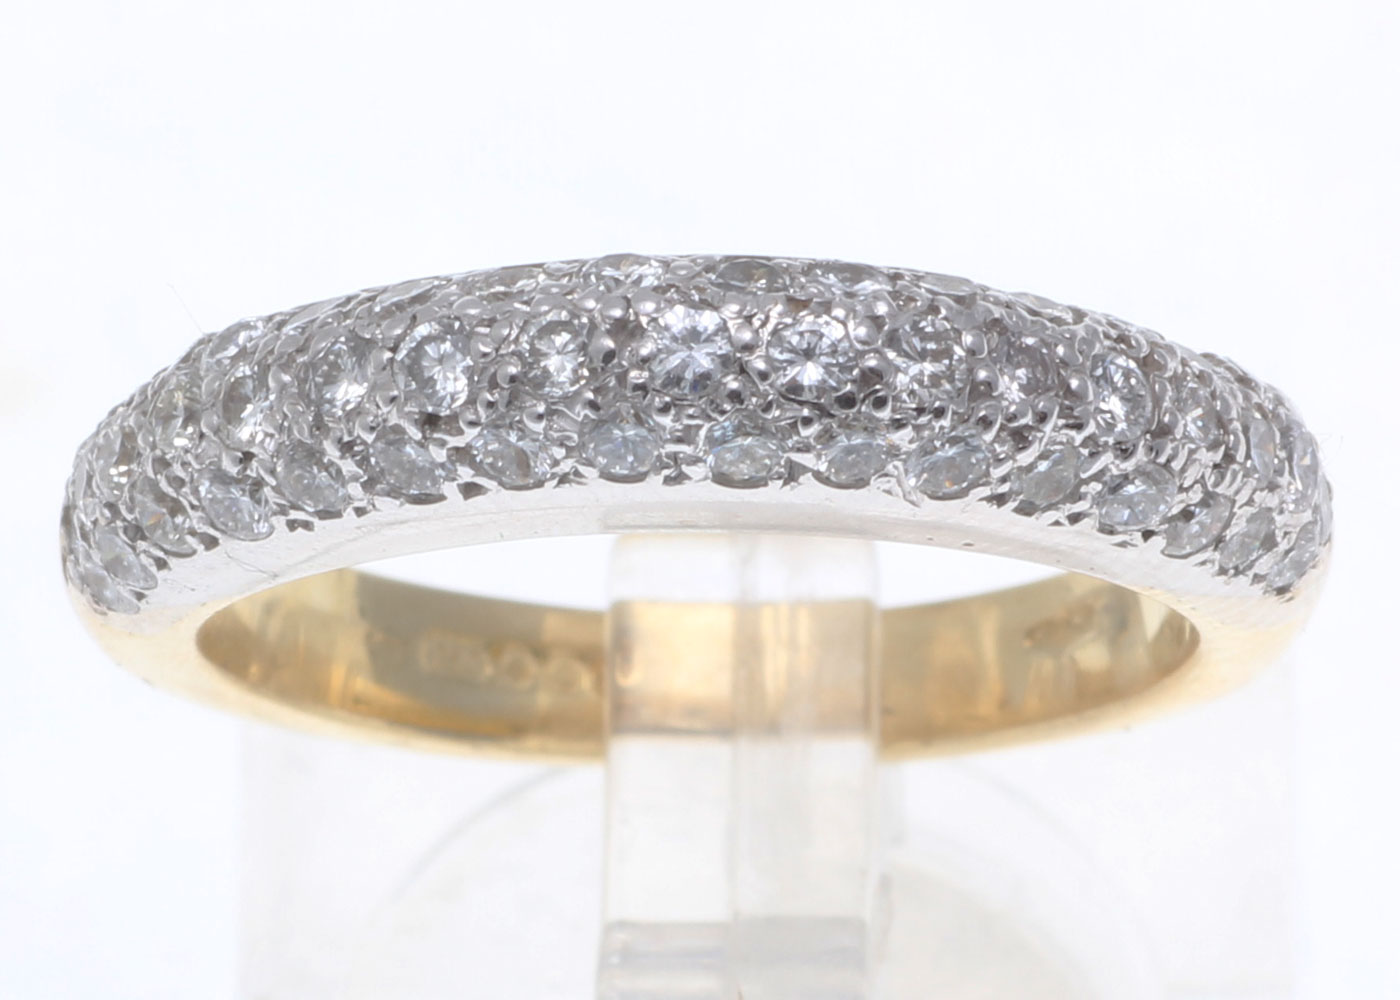 18ct Wedding Band Diamond Ring E VVS2 1.58 Carats - Image 2 of 4